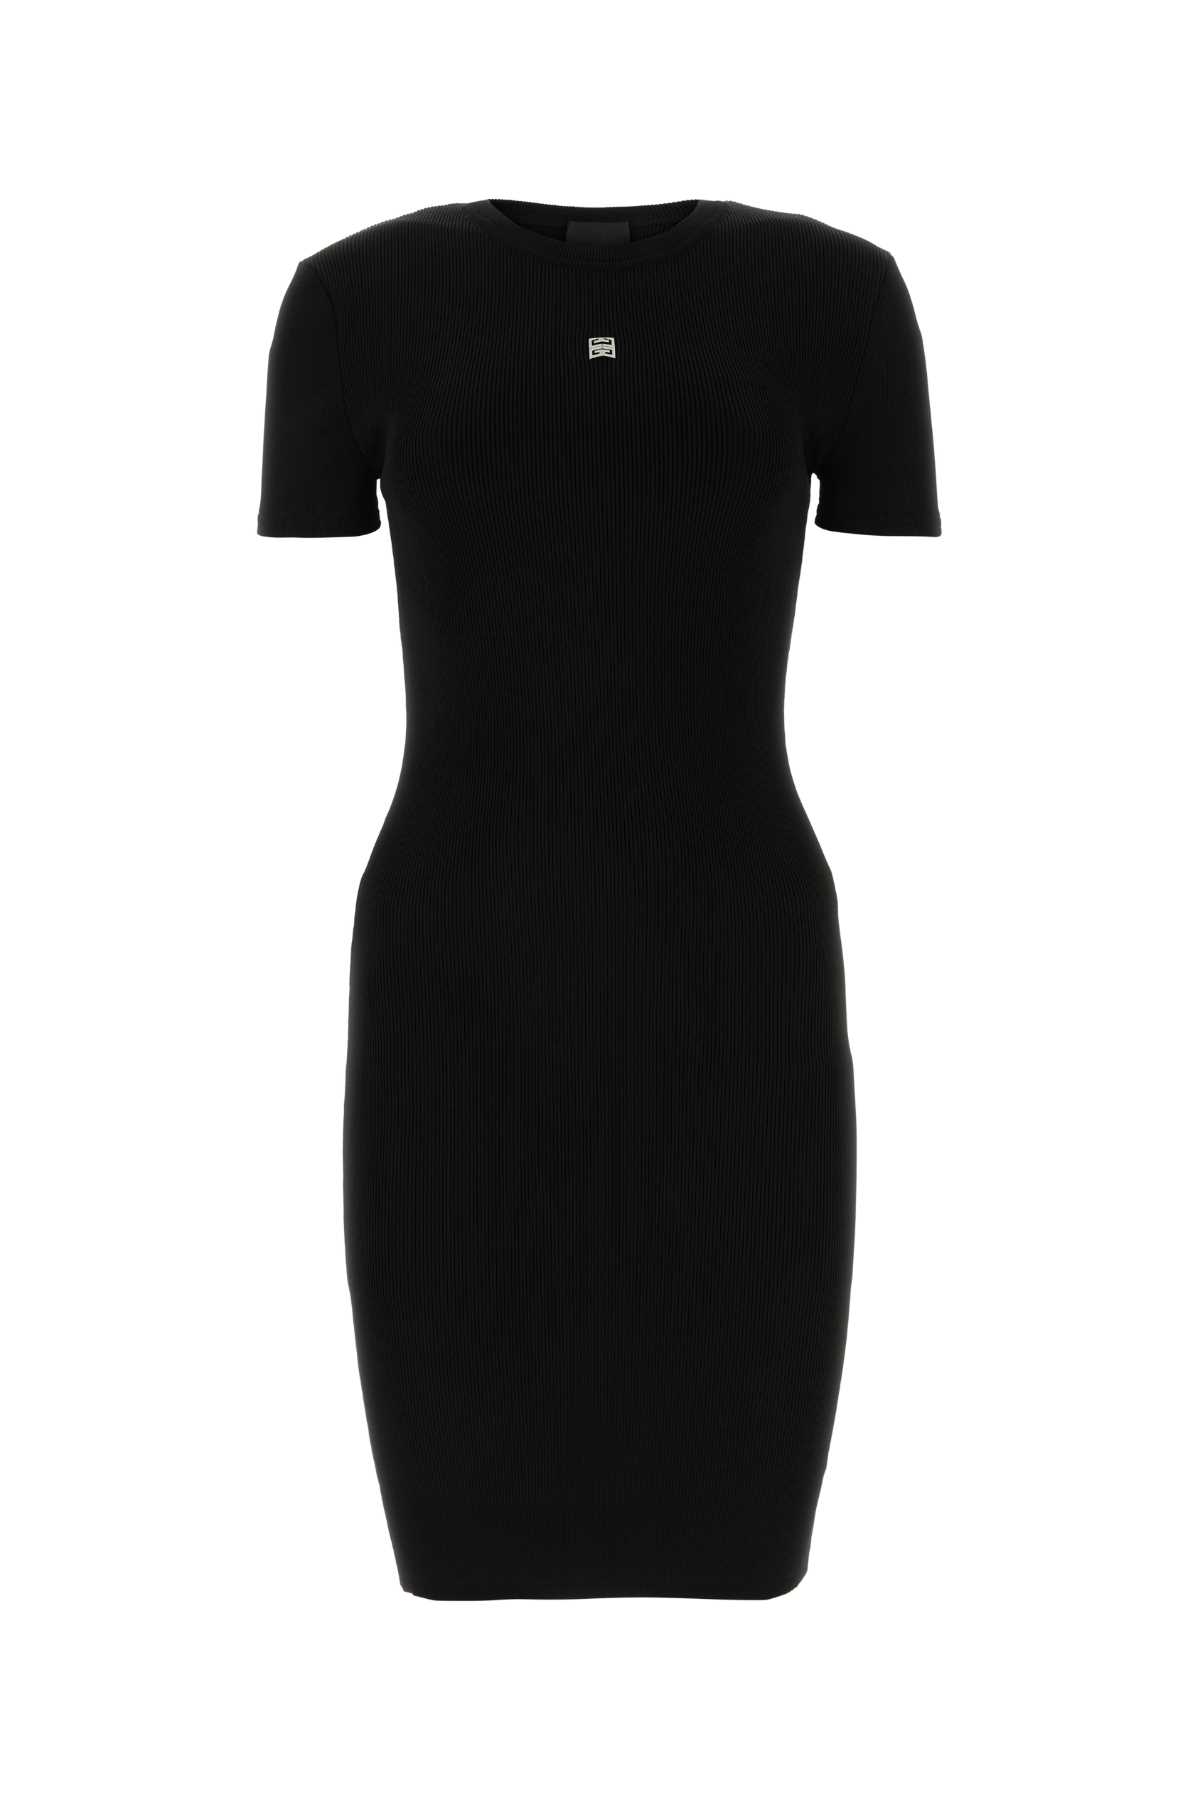 Givenchy Black Stretch Viscose Blend Mini Dress